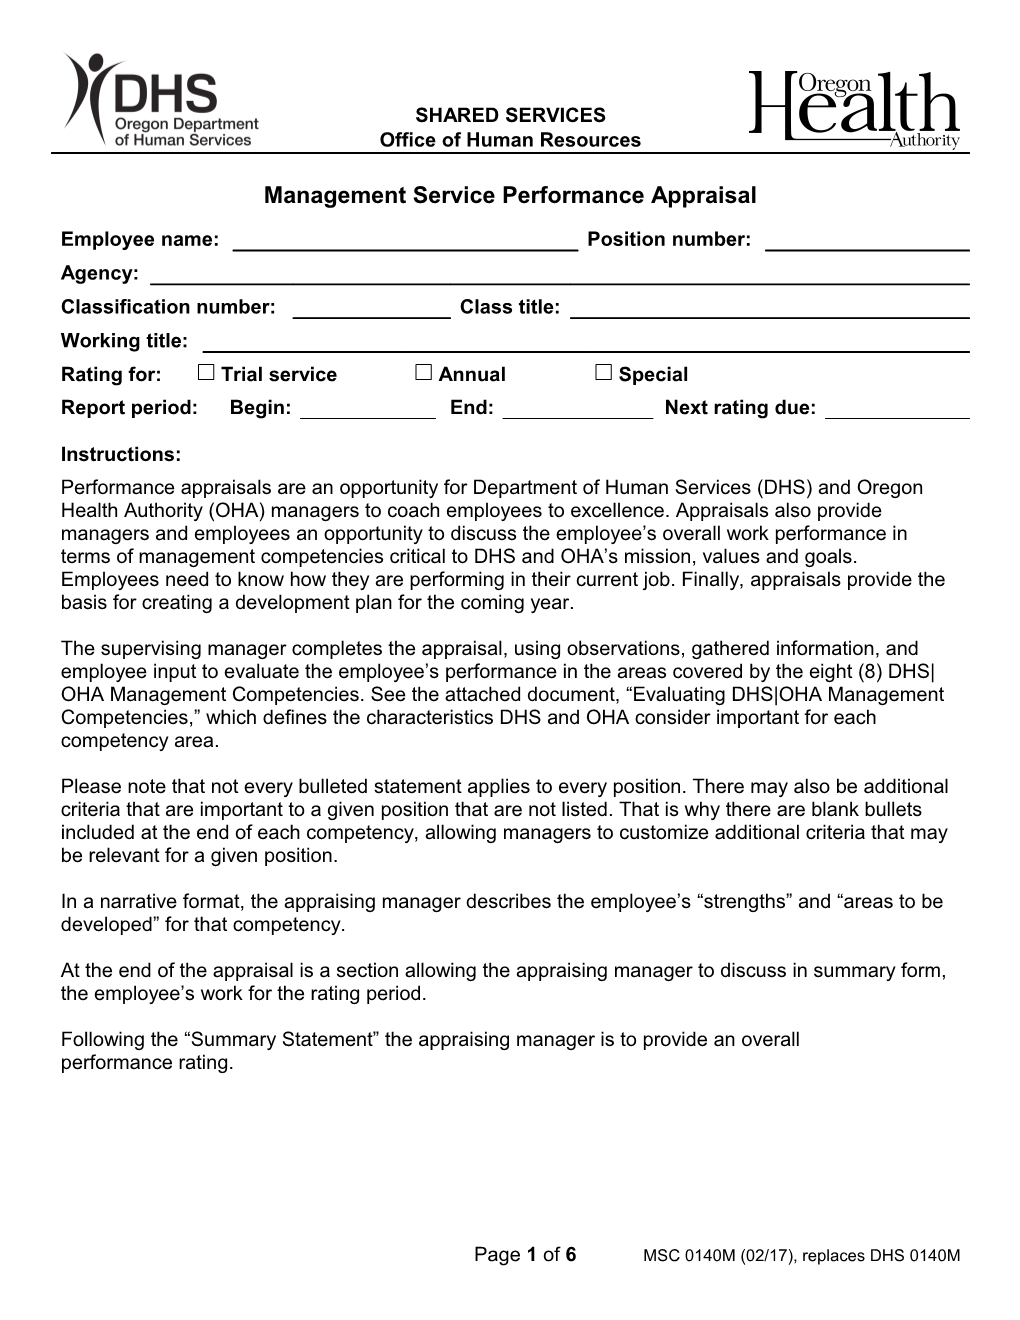 Management Service Performance Appraisal